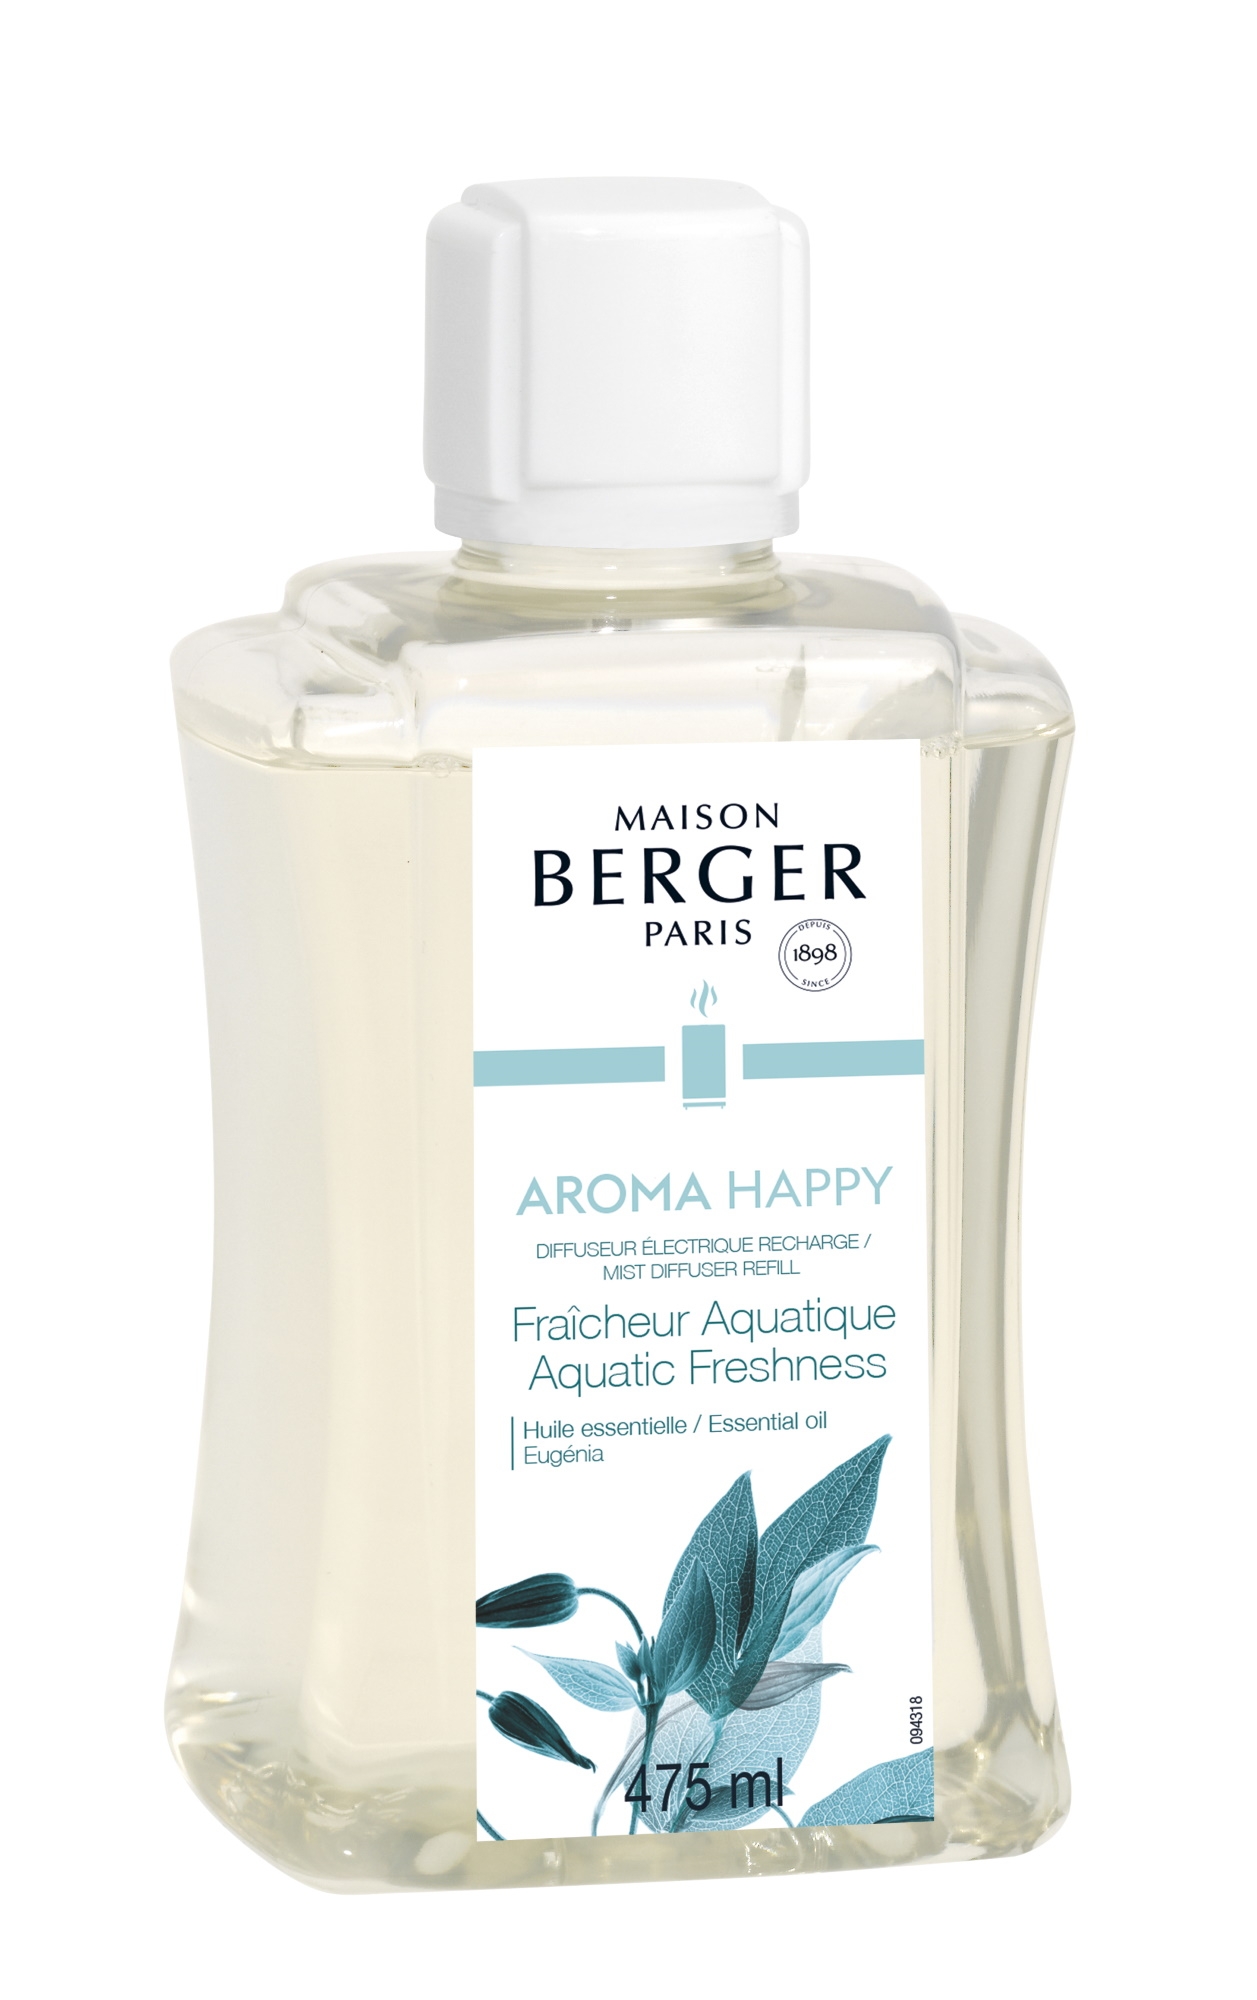 Parfum pentru difuzor ultrasonic Berger Aroma Happy – Fraicheur Aquatique 475ml Maison Berger